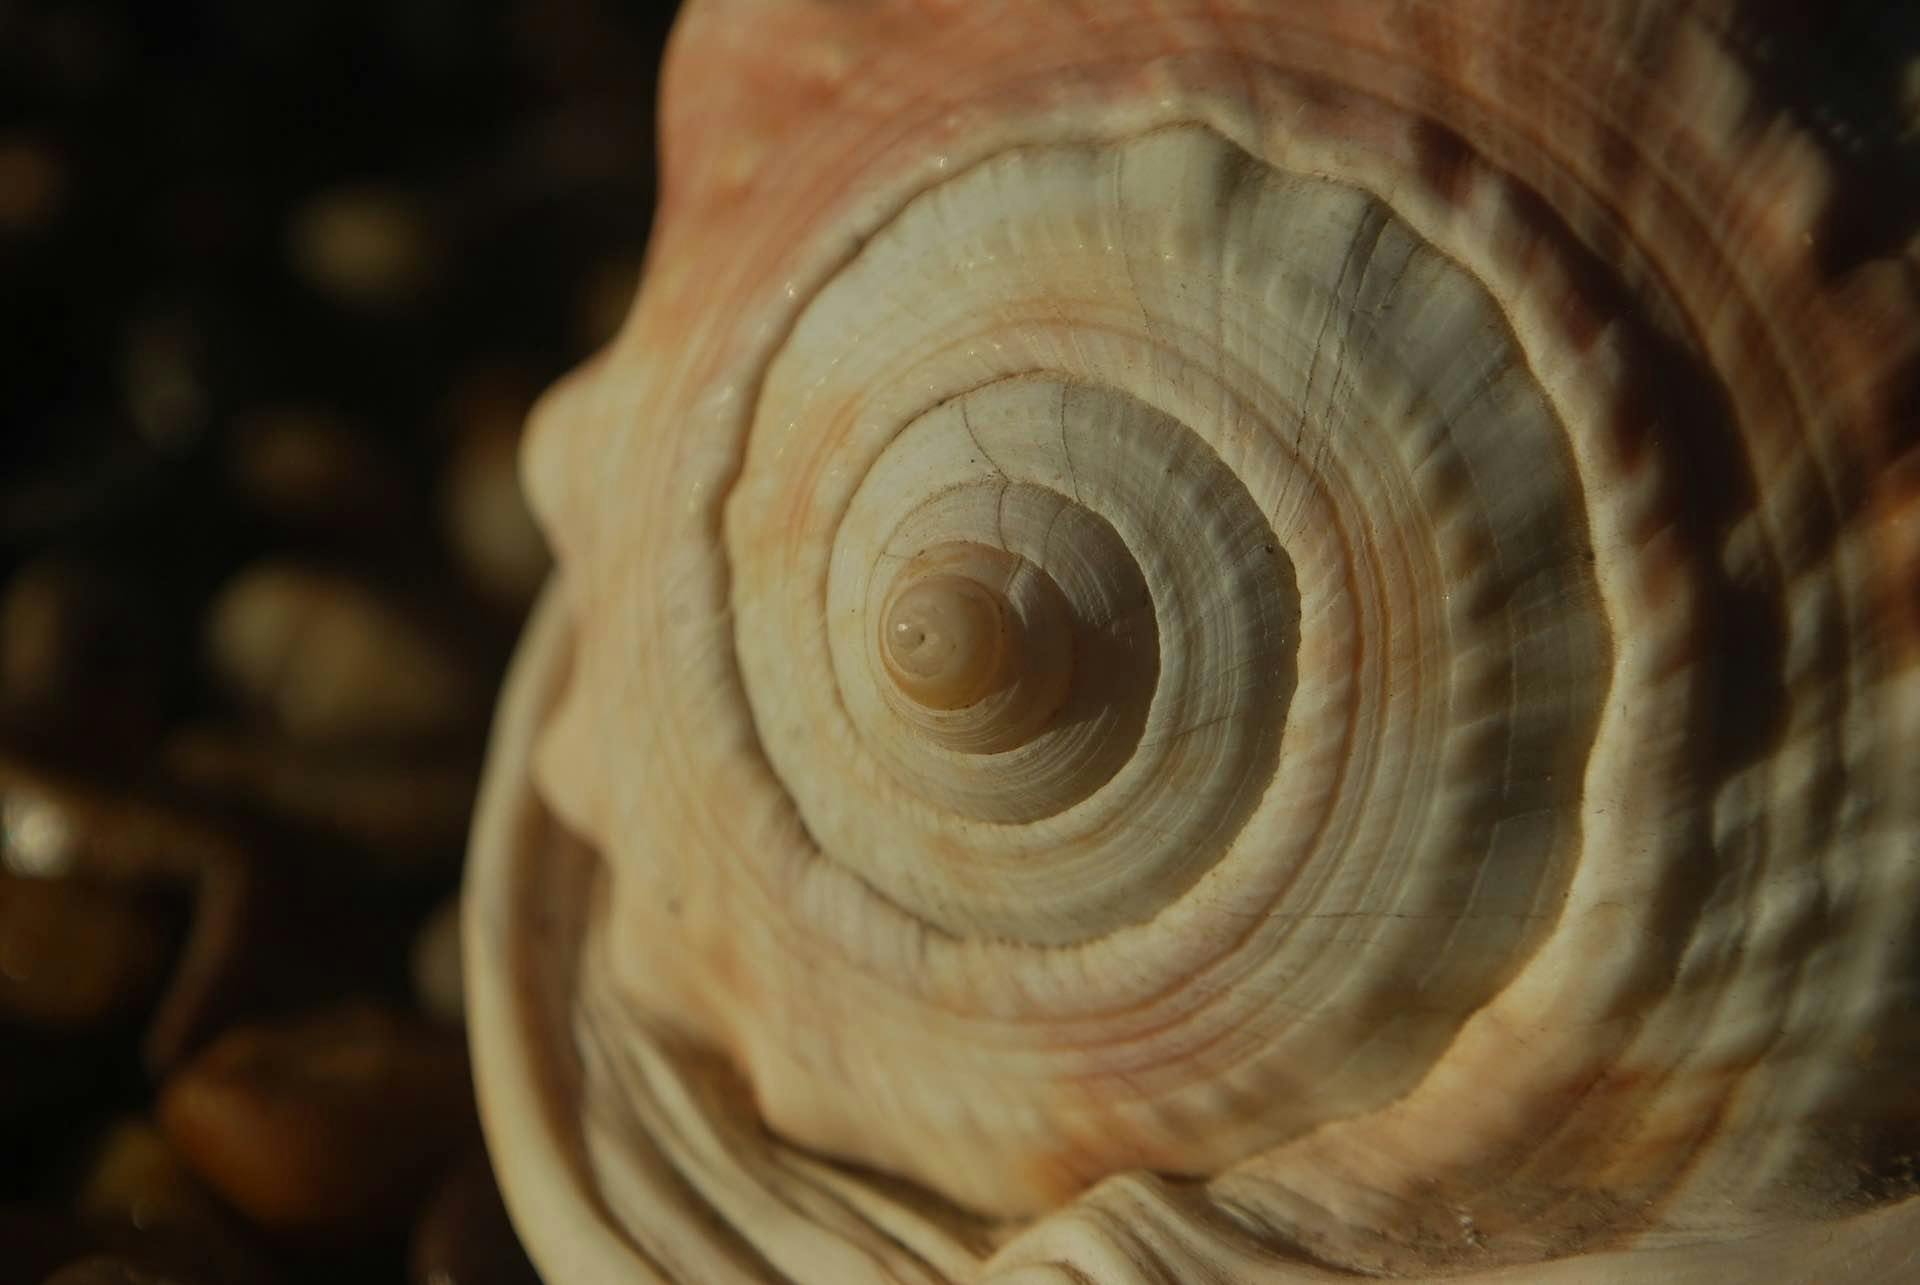 A shell resembling the Fibinacci spiral